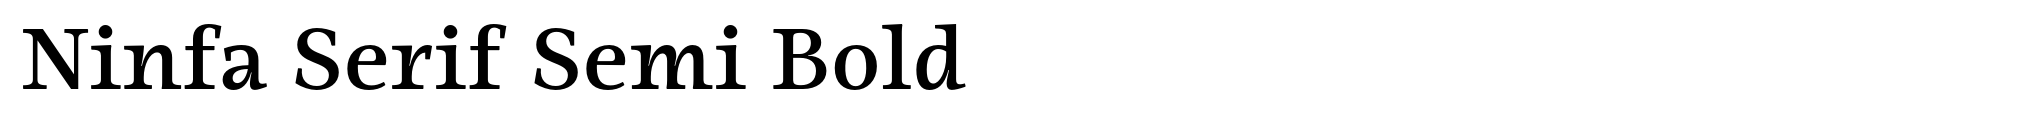 Ninfa Serif Semi Bold image